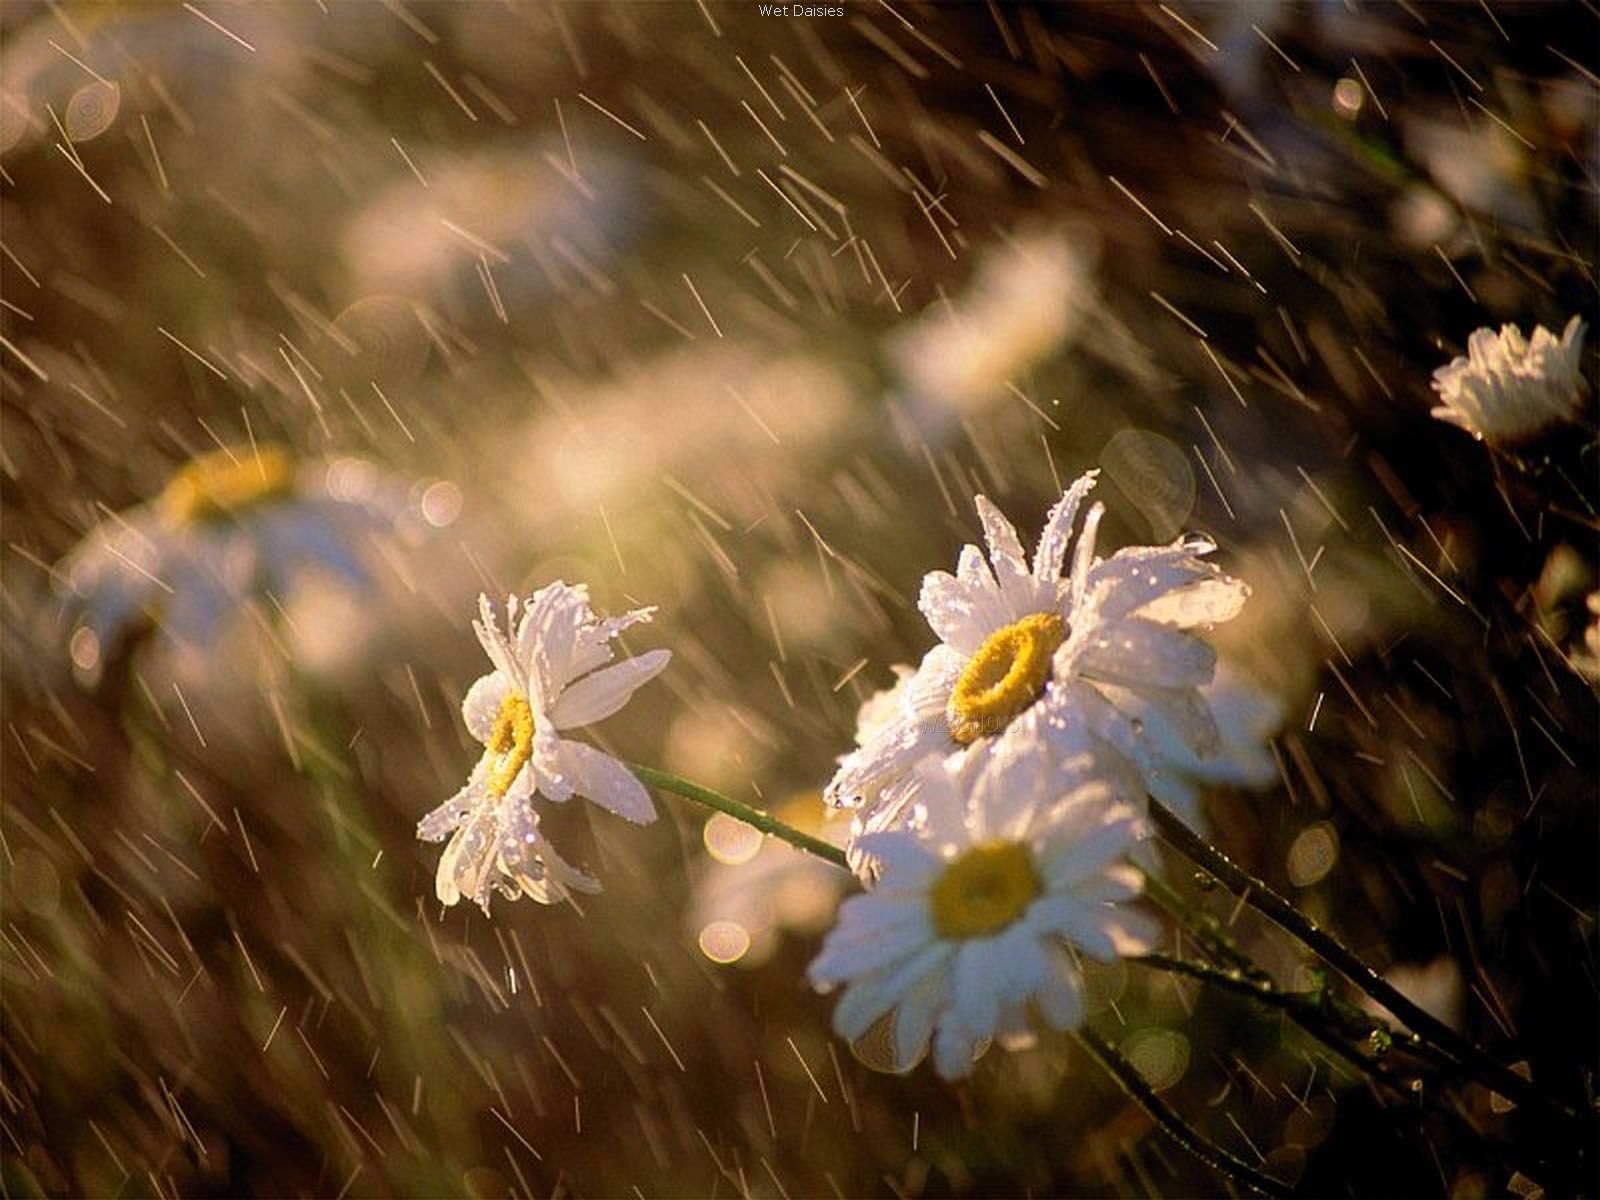 Spring Rain Wallpaper 1080p Free Download. No rain no flowers